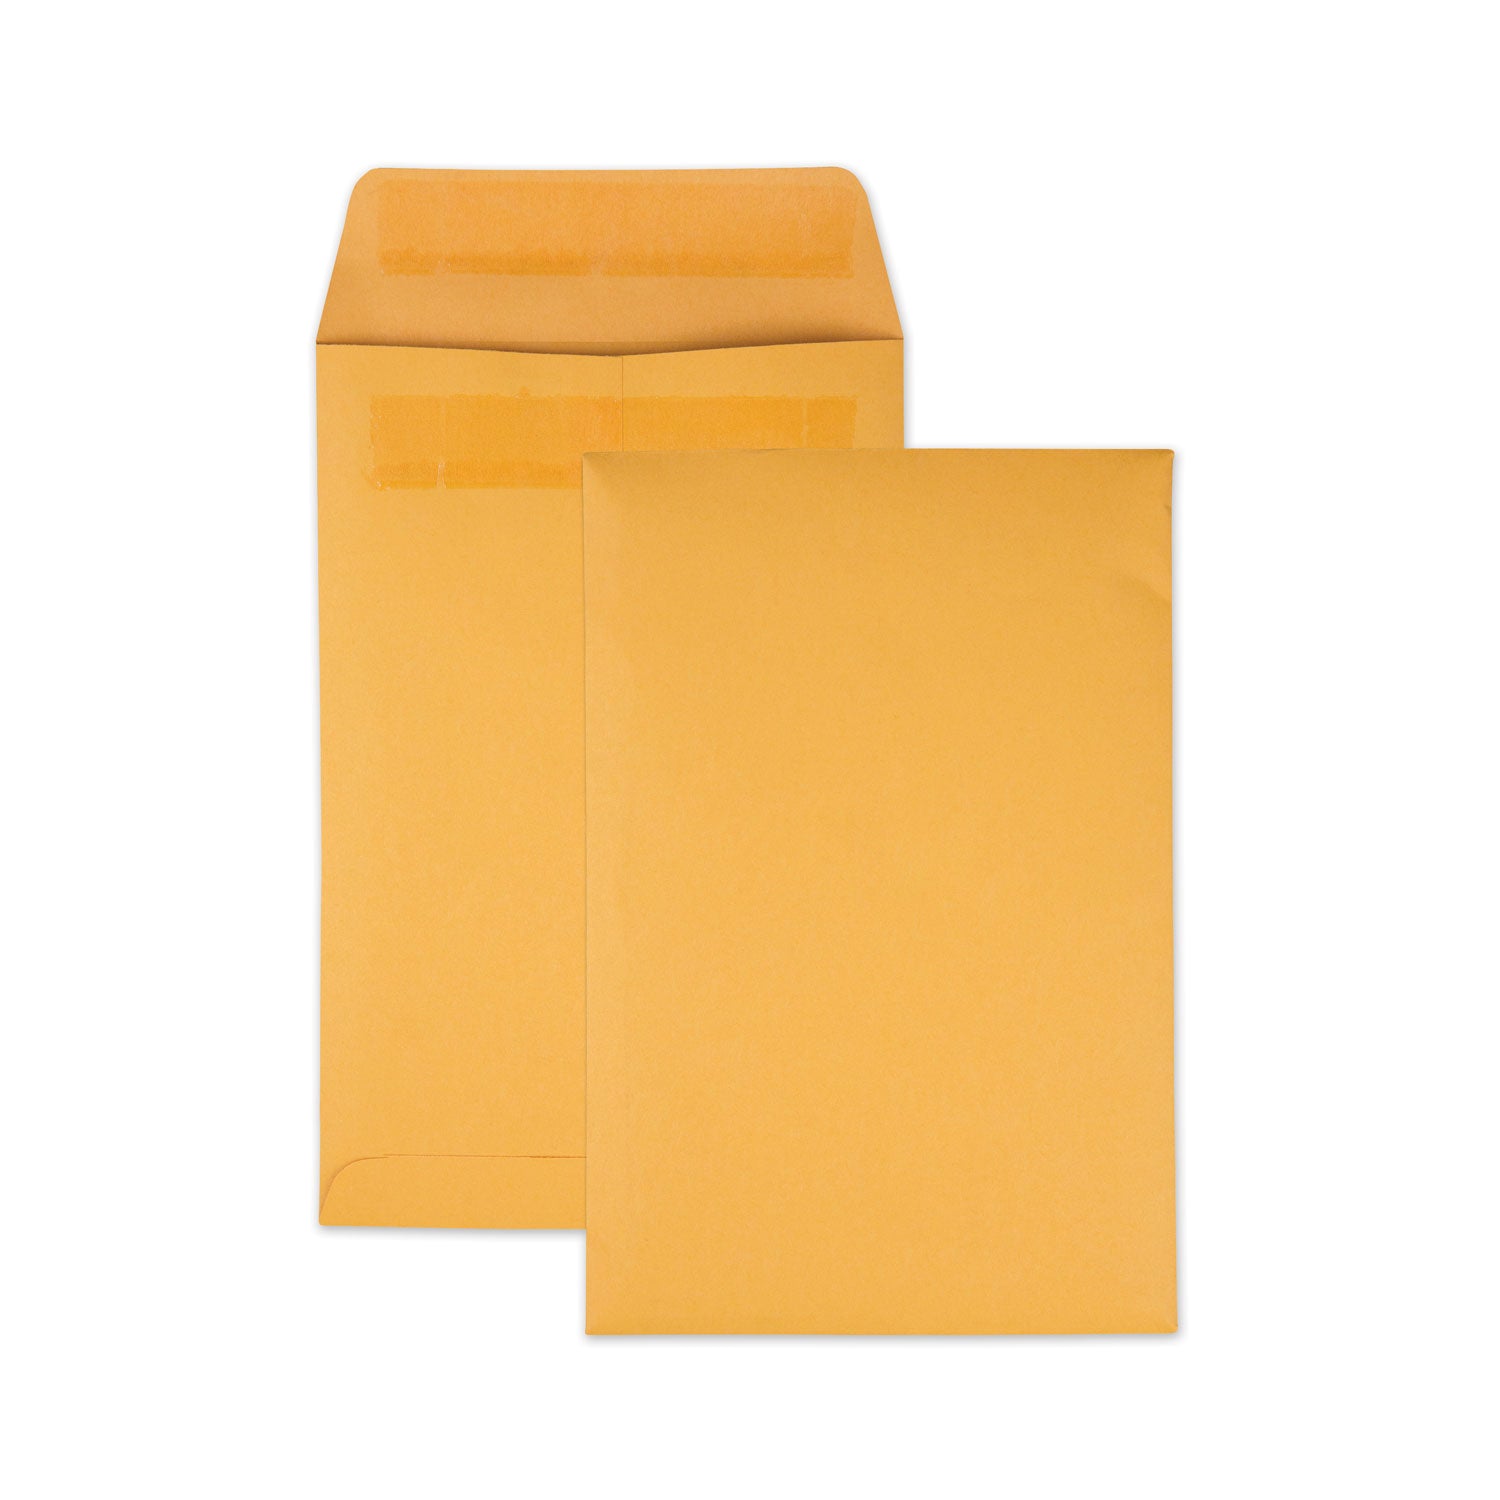 Redi-Seal Catalog Envelope, #1 3/4, Cheese Blade Flap, Redi-Seal Adhesive Closure, 6.5 x 9.5, Brown Kraft, 250/Box - 